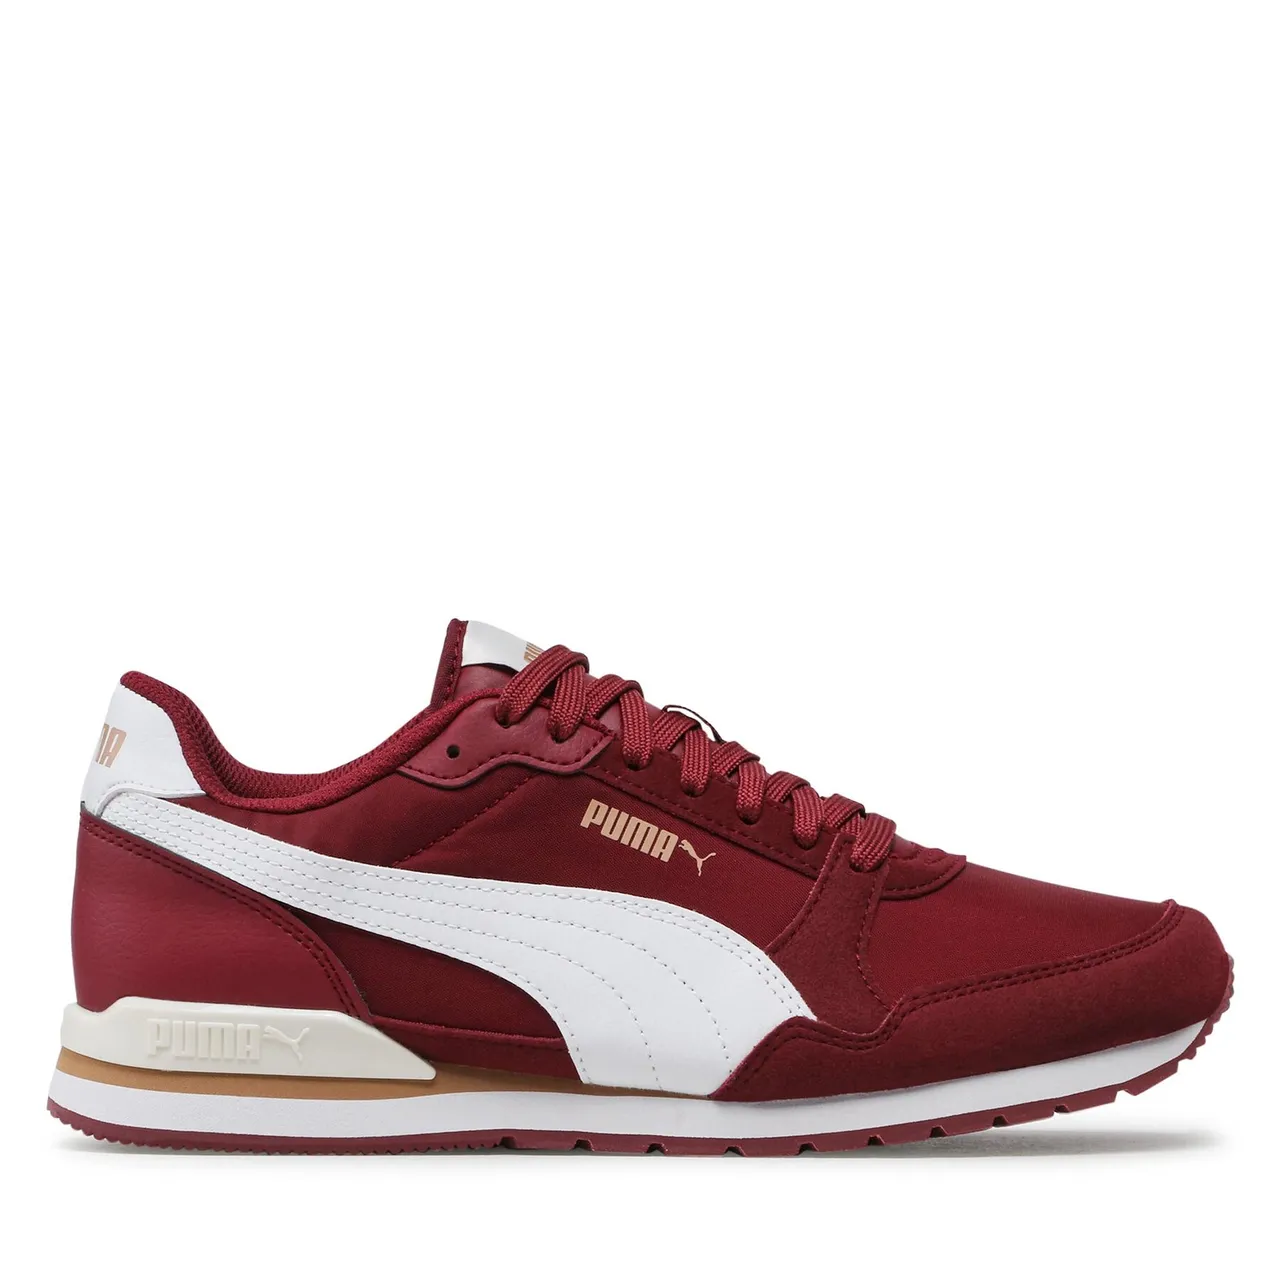 Sneakers Puma St Runner V3 Nl 384857 15 Regal Red/White/Dusty Tan